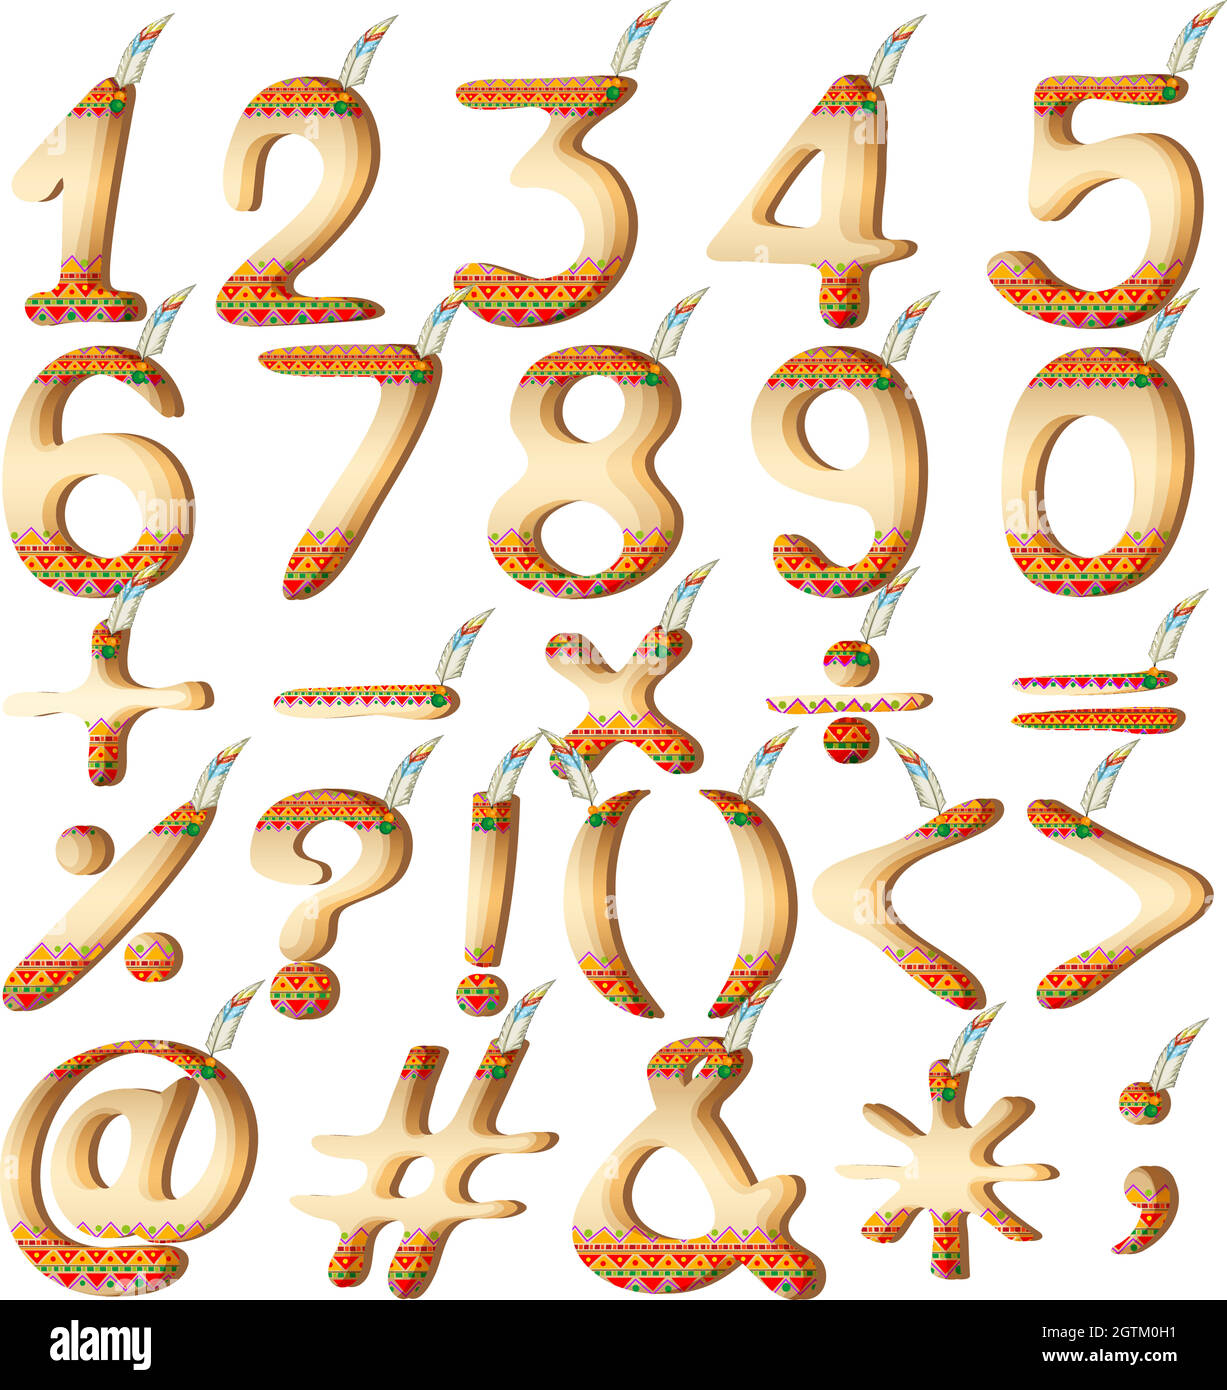 Numeric figures in Indian artwork Stock Vector